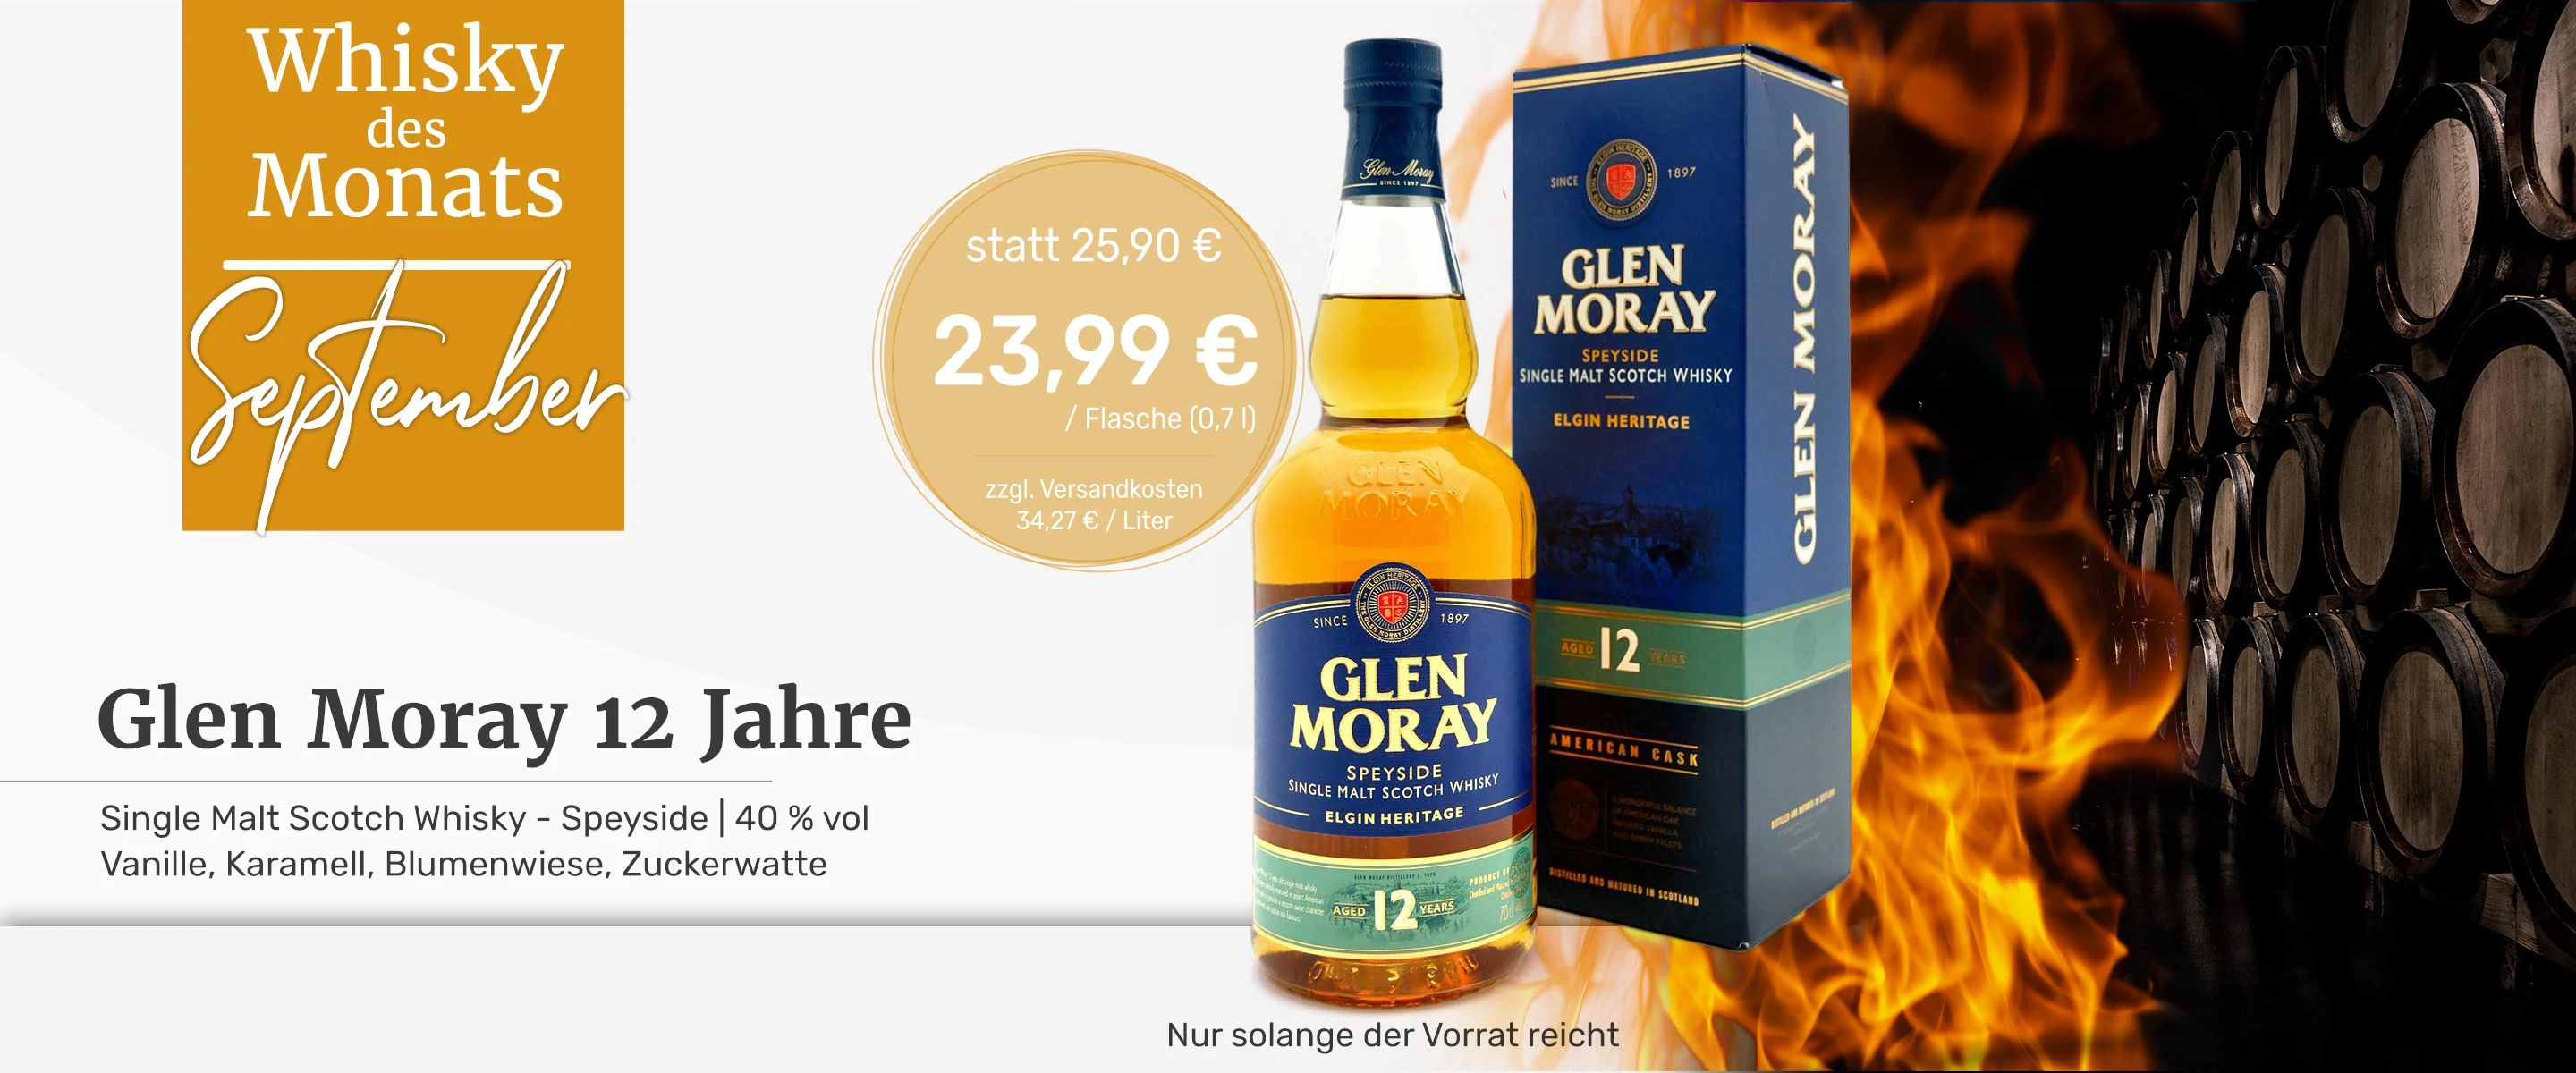 Whisky_des_Monats_September_Glen_Moray_12_Jahre-01379